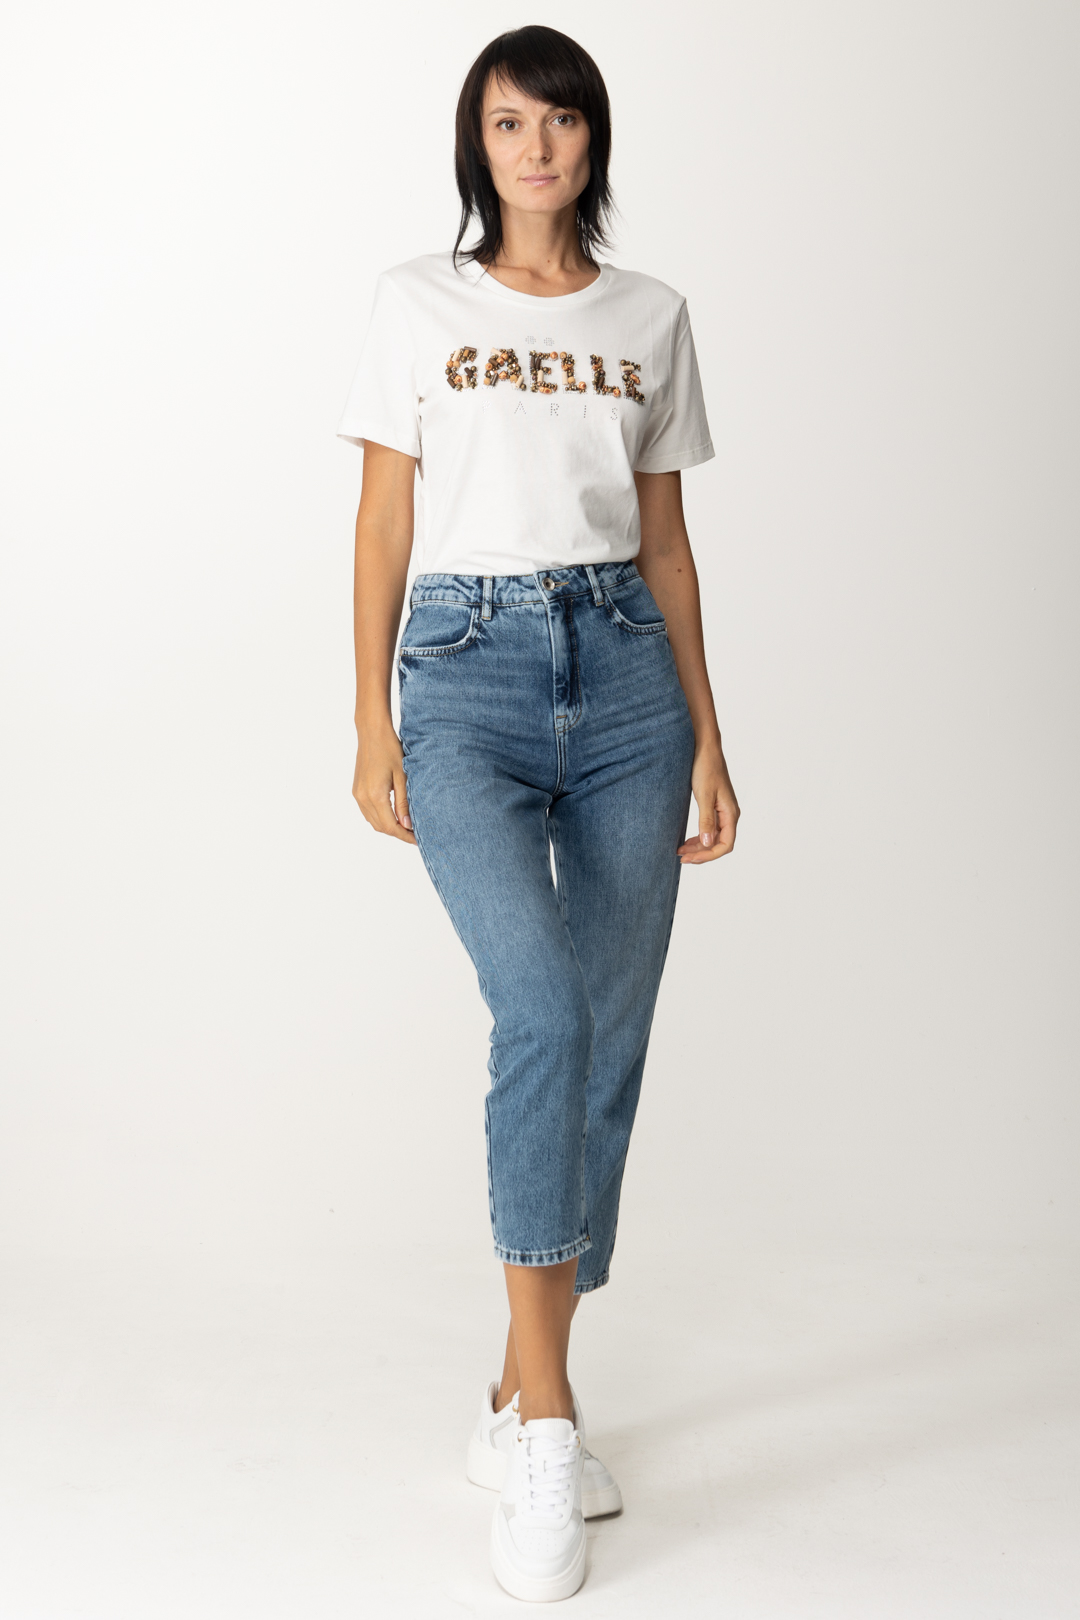 Anteprima: Gaelle Paris T-shirt con logo ricamato Offwhite